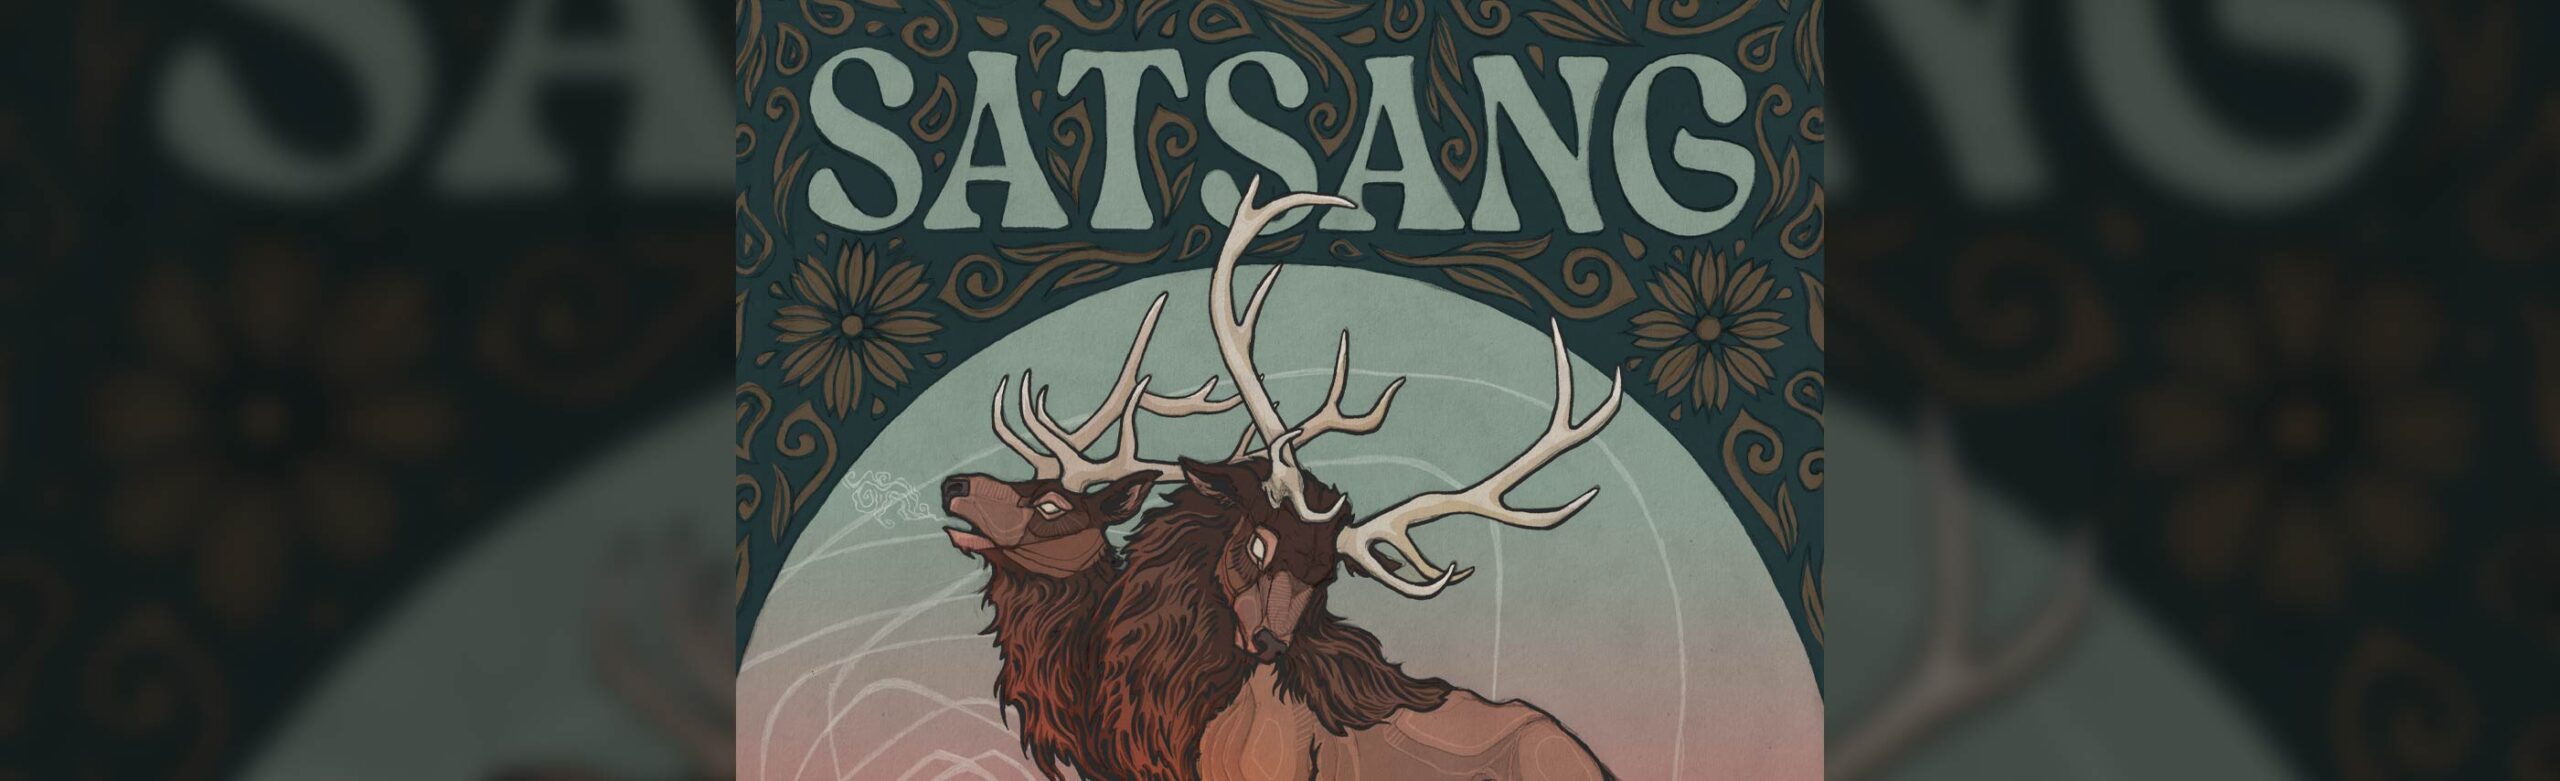 Montana’s Satsang Confirms Concert at The ELM Image